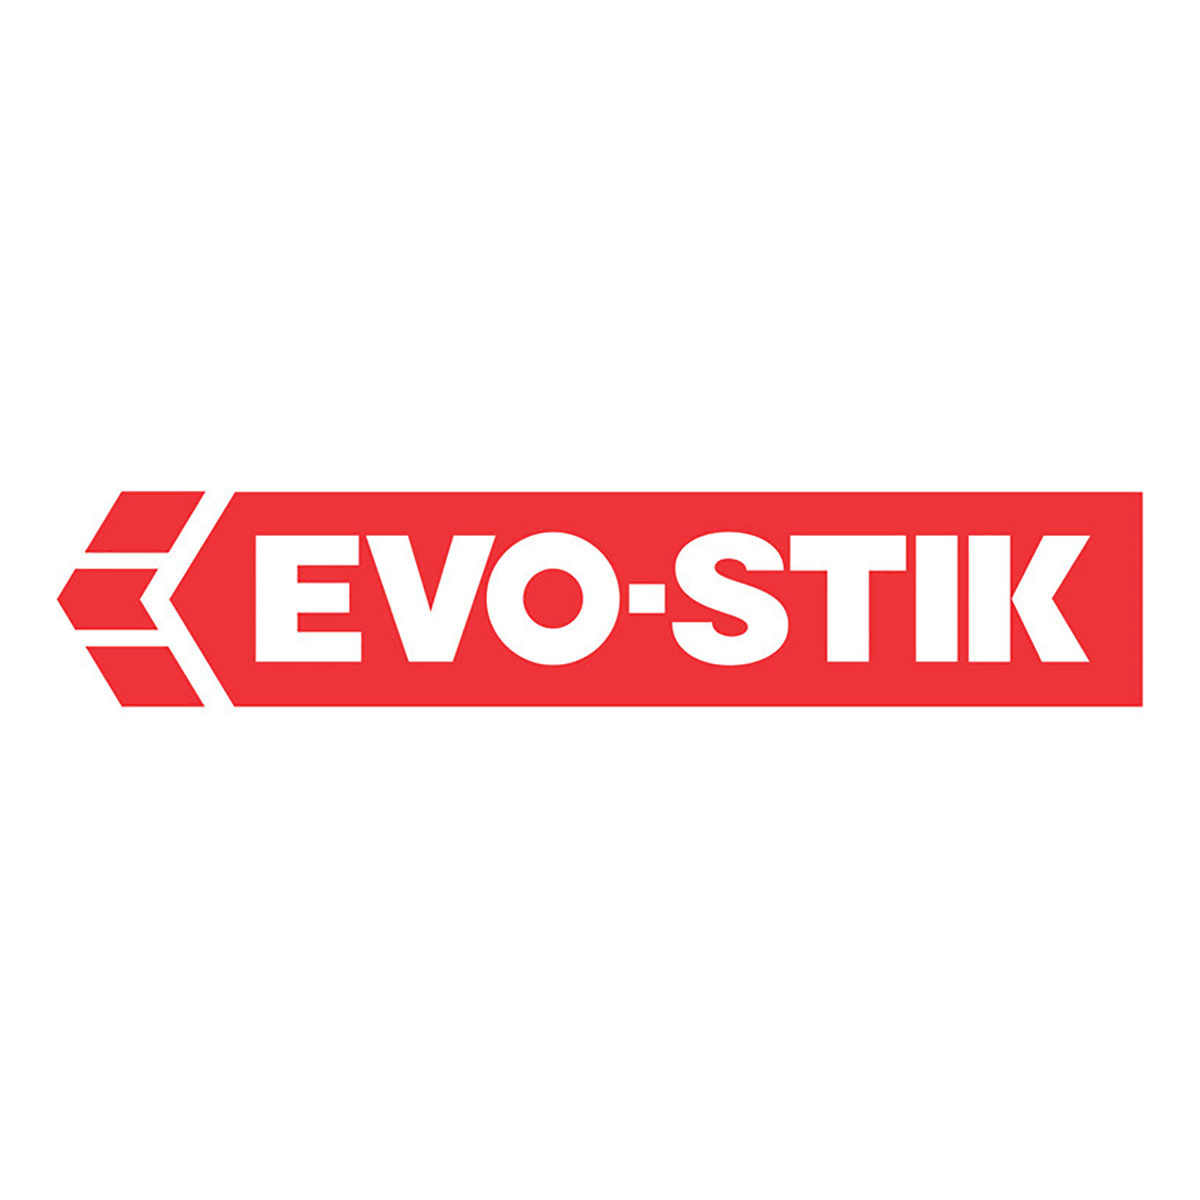 Bostik Evo-stik Herder "Accelerator F" tørrdrakt, 33ml